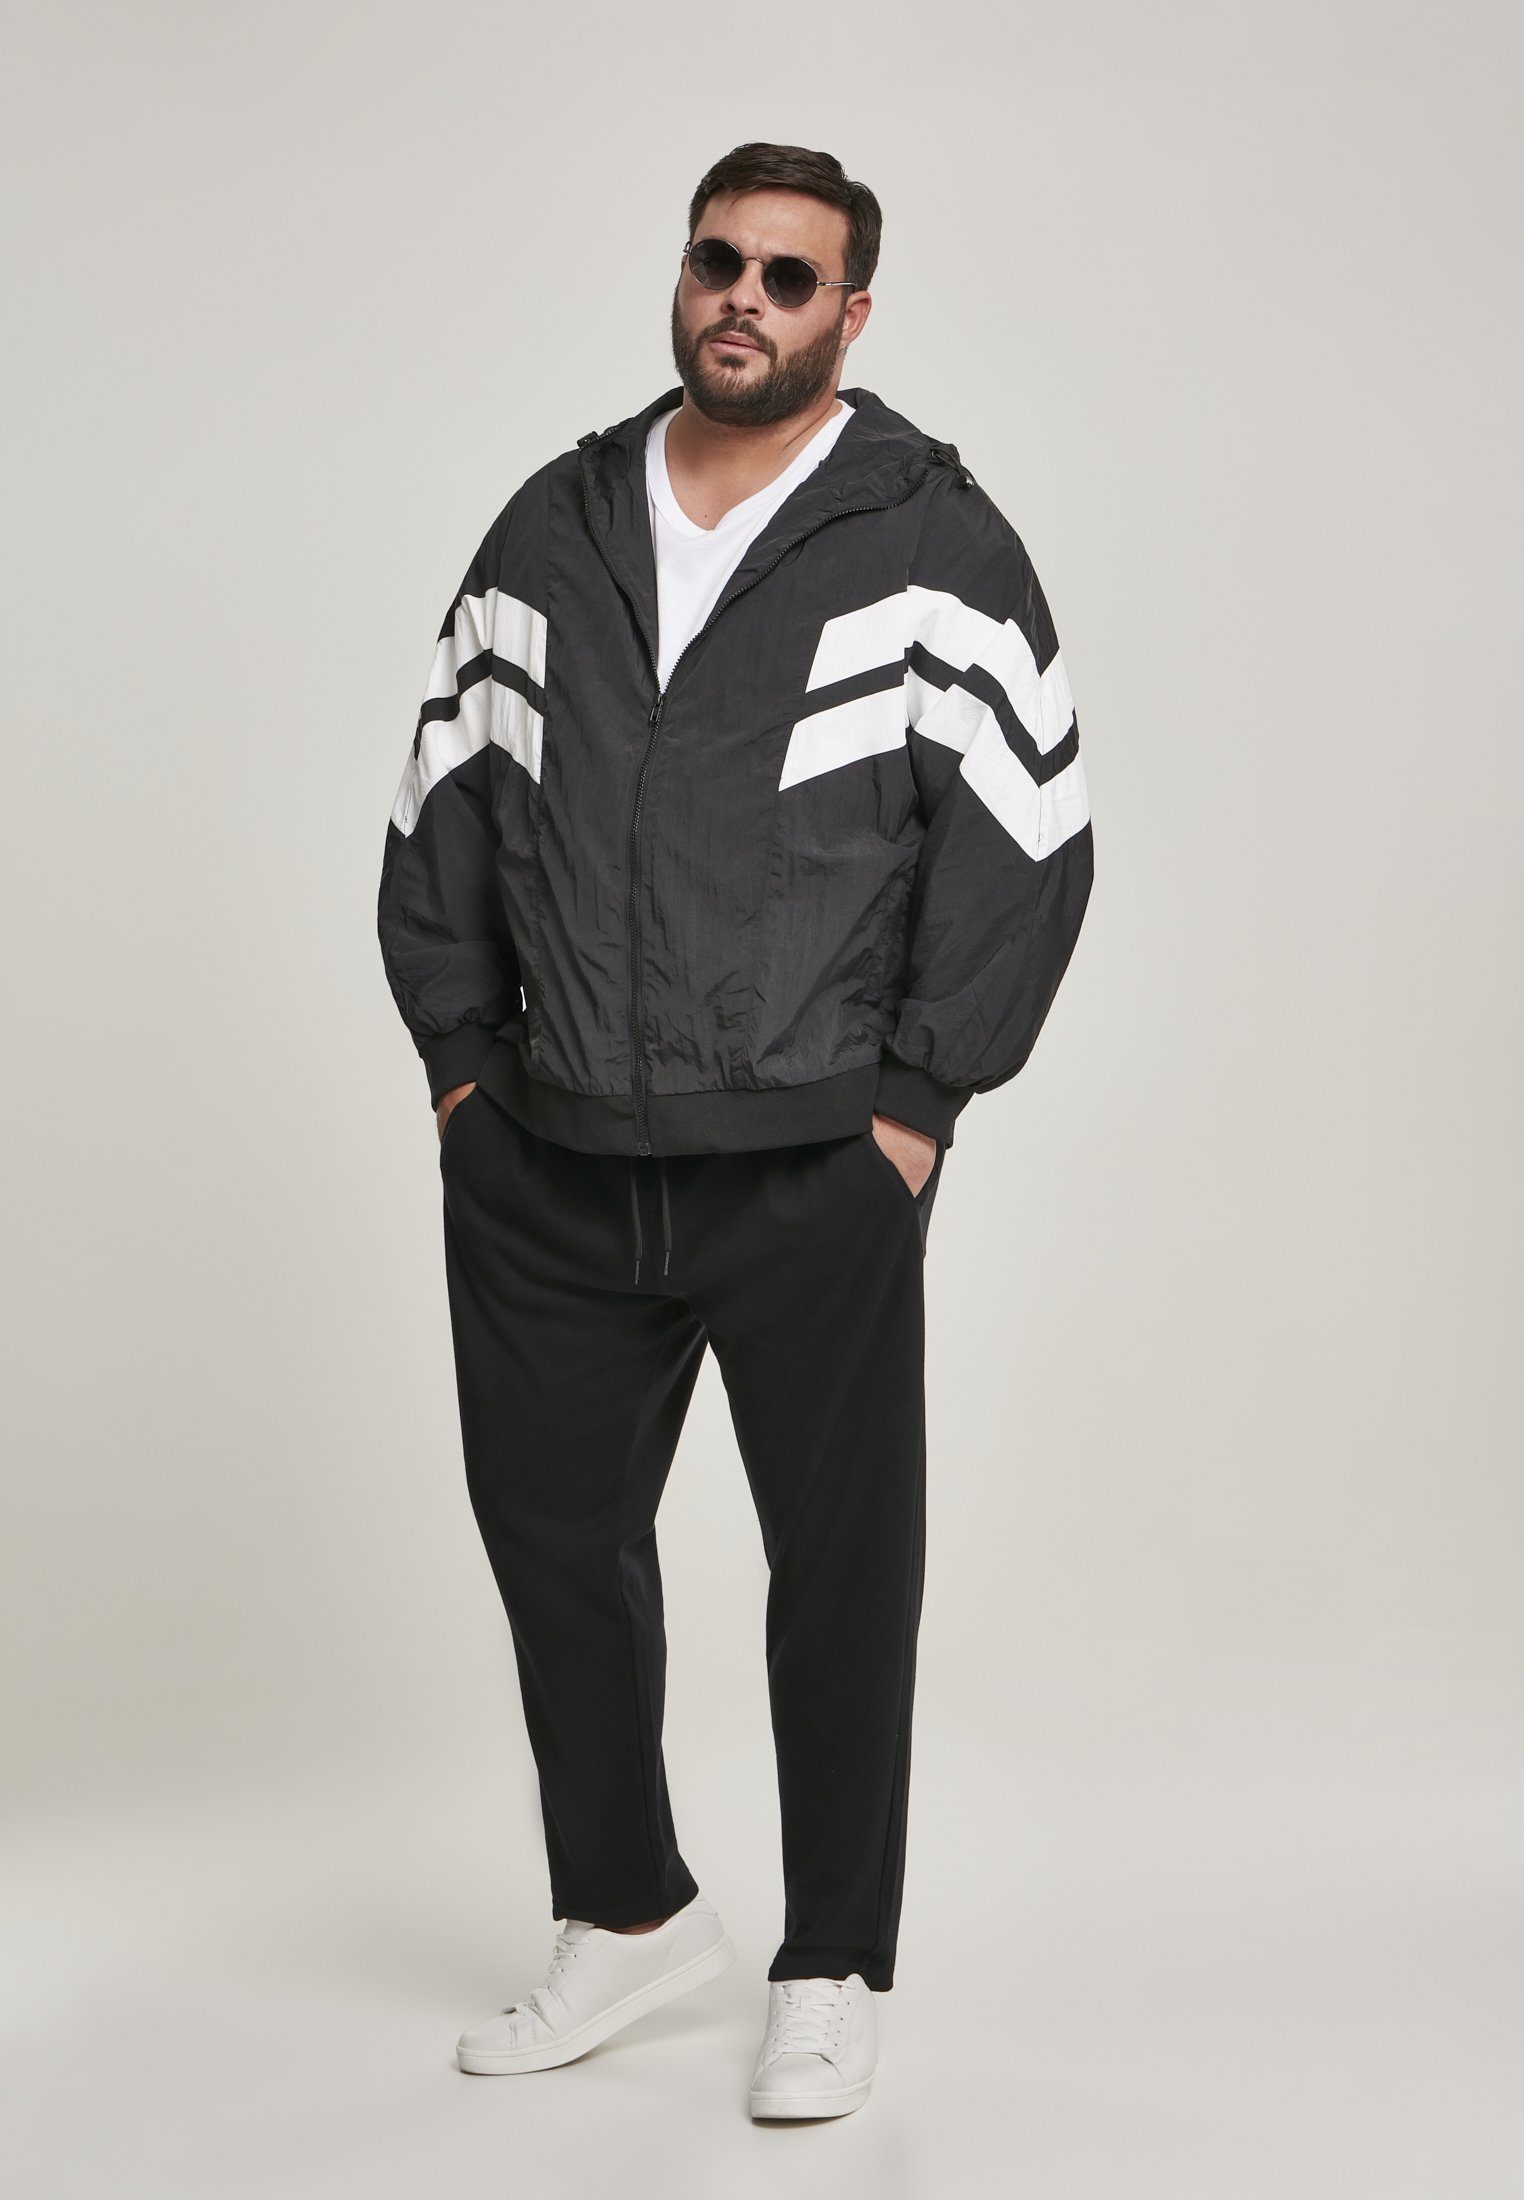 black/white (1-St) Crinkle CLASSICS Track URBAN Jacket Outdoorjacke Herren Panel